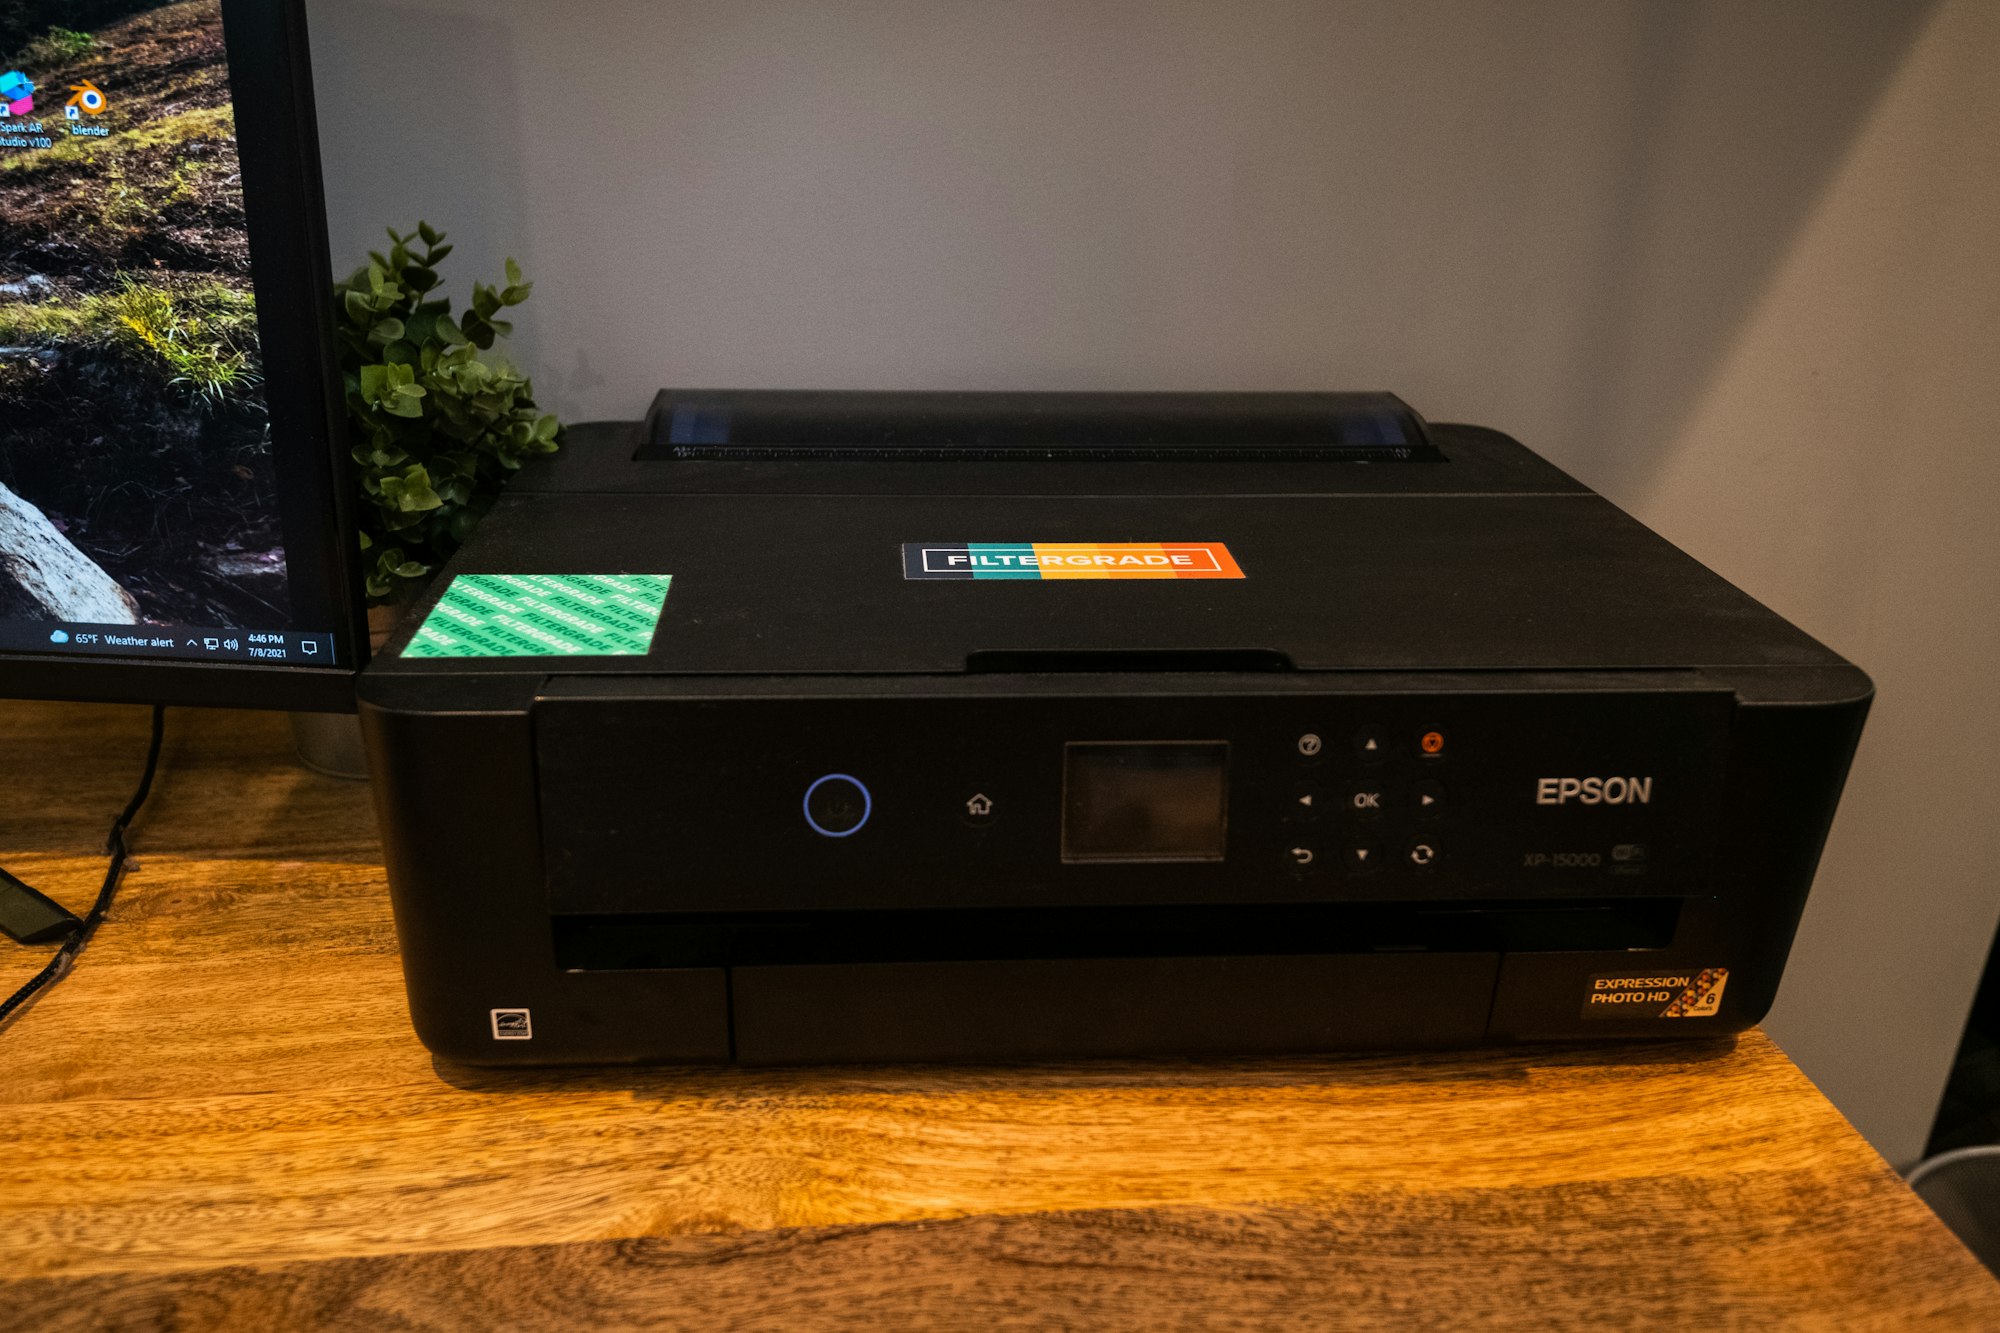 Epson printer for printing photos and artwork.